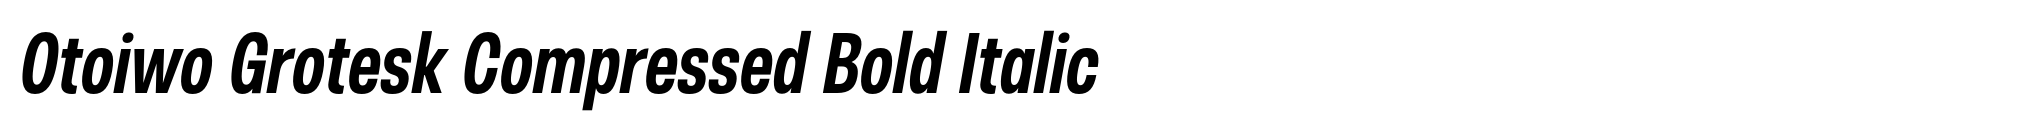 Otoiwo Grotesk Compressed Bold Italic image